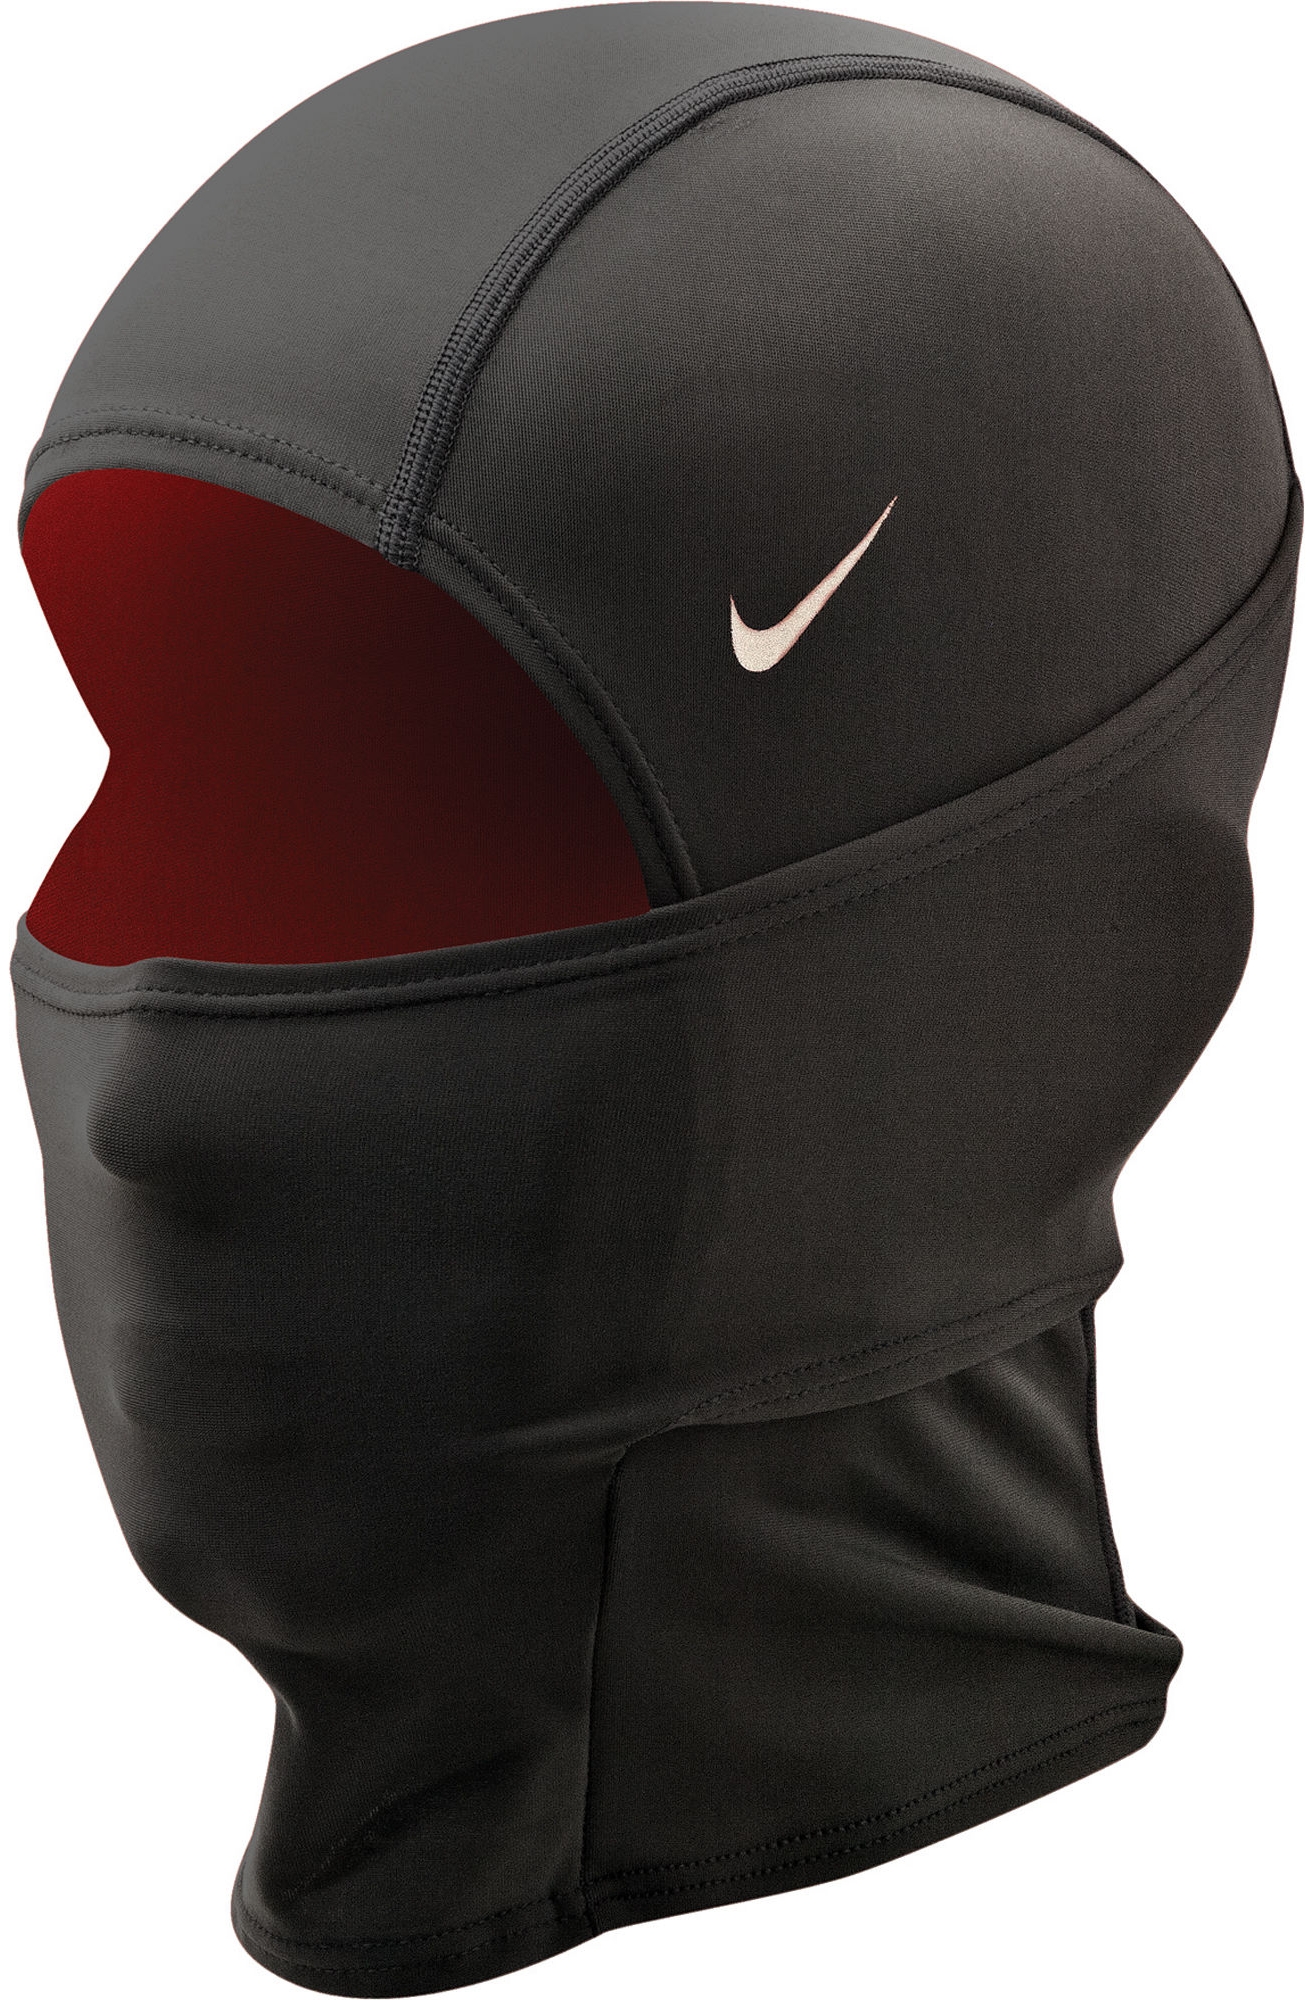 Nike Pro Hyperwarm Hood, $30